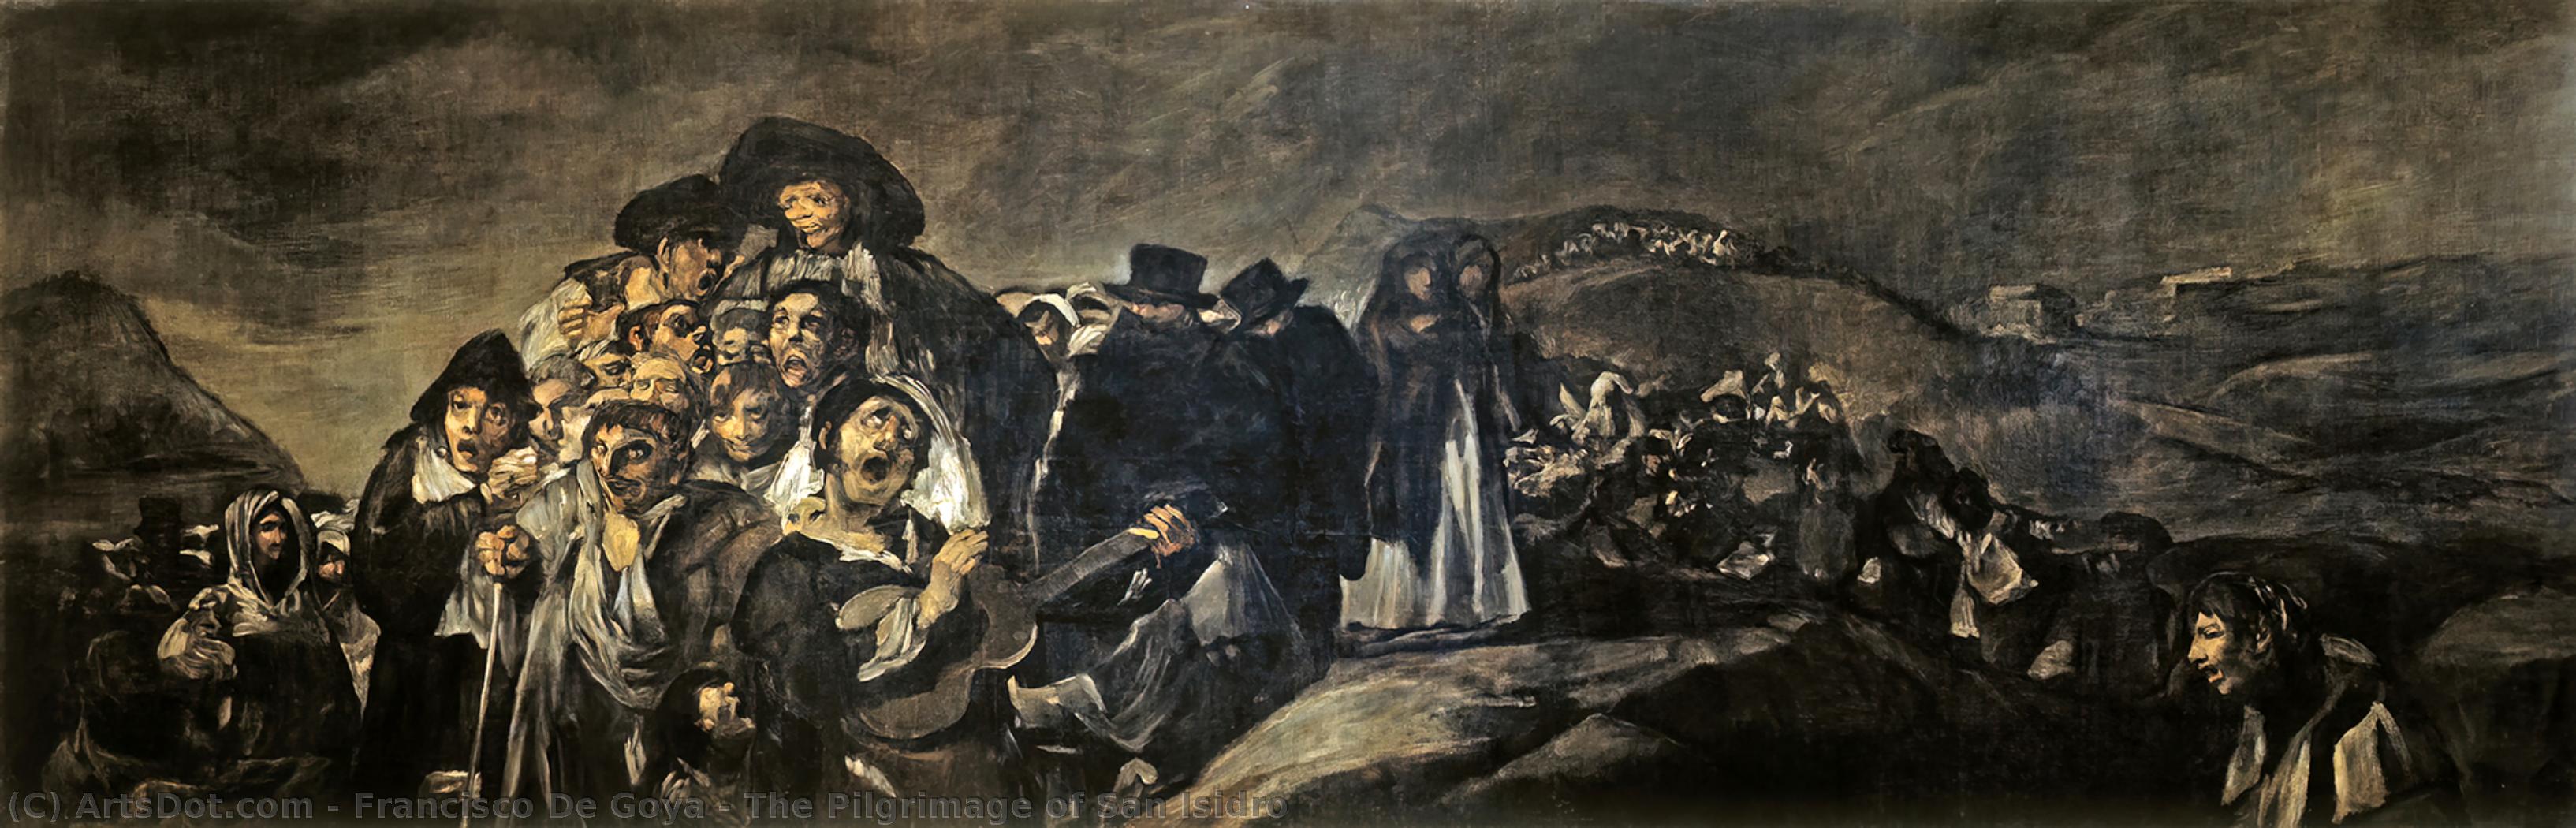 Order Oil Painting Replica The Pilgrimage of San Isidro, 1823 by Francisco De Goya (1746-1828, Spain) | ArtsDot.com